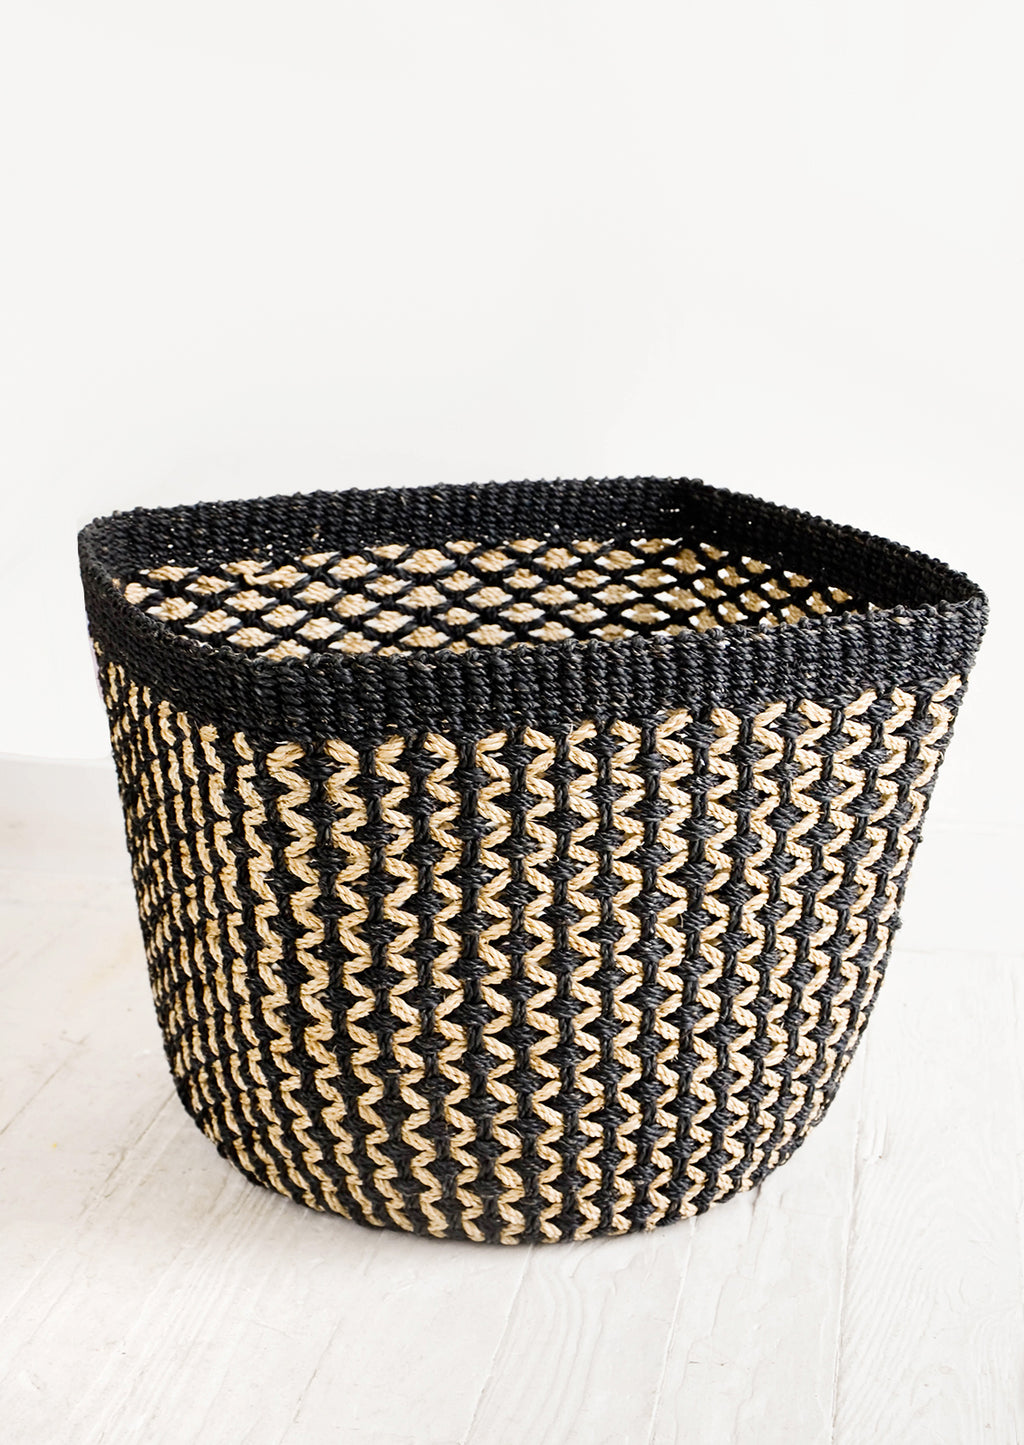 Large: Square storage basket in black with tan zigzag design and black top rim